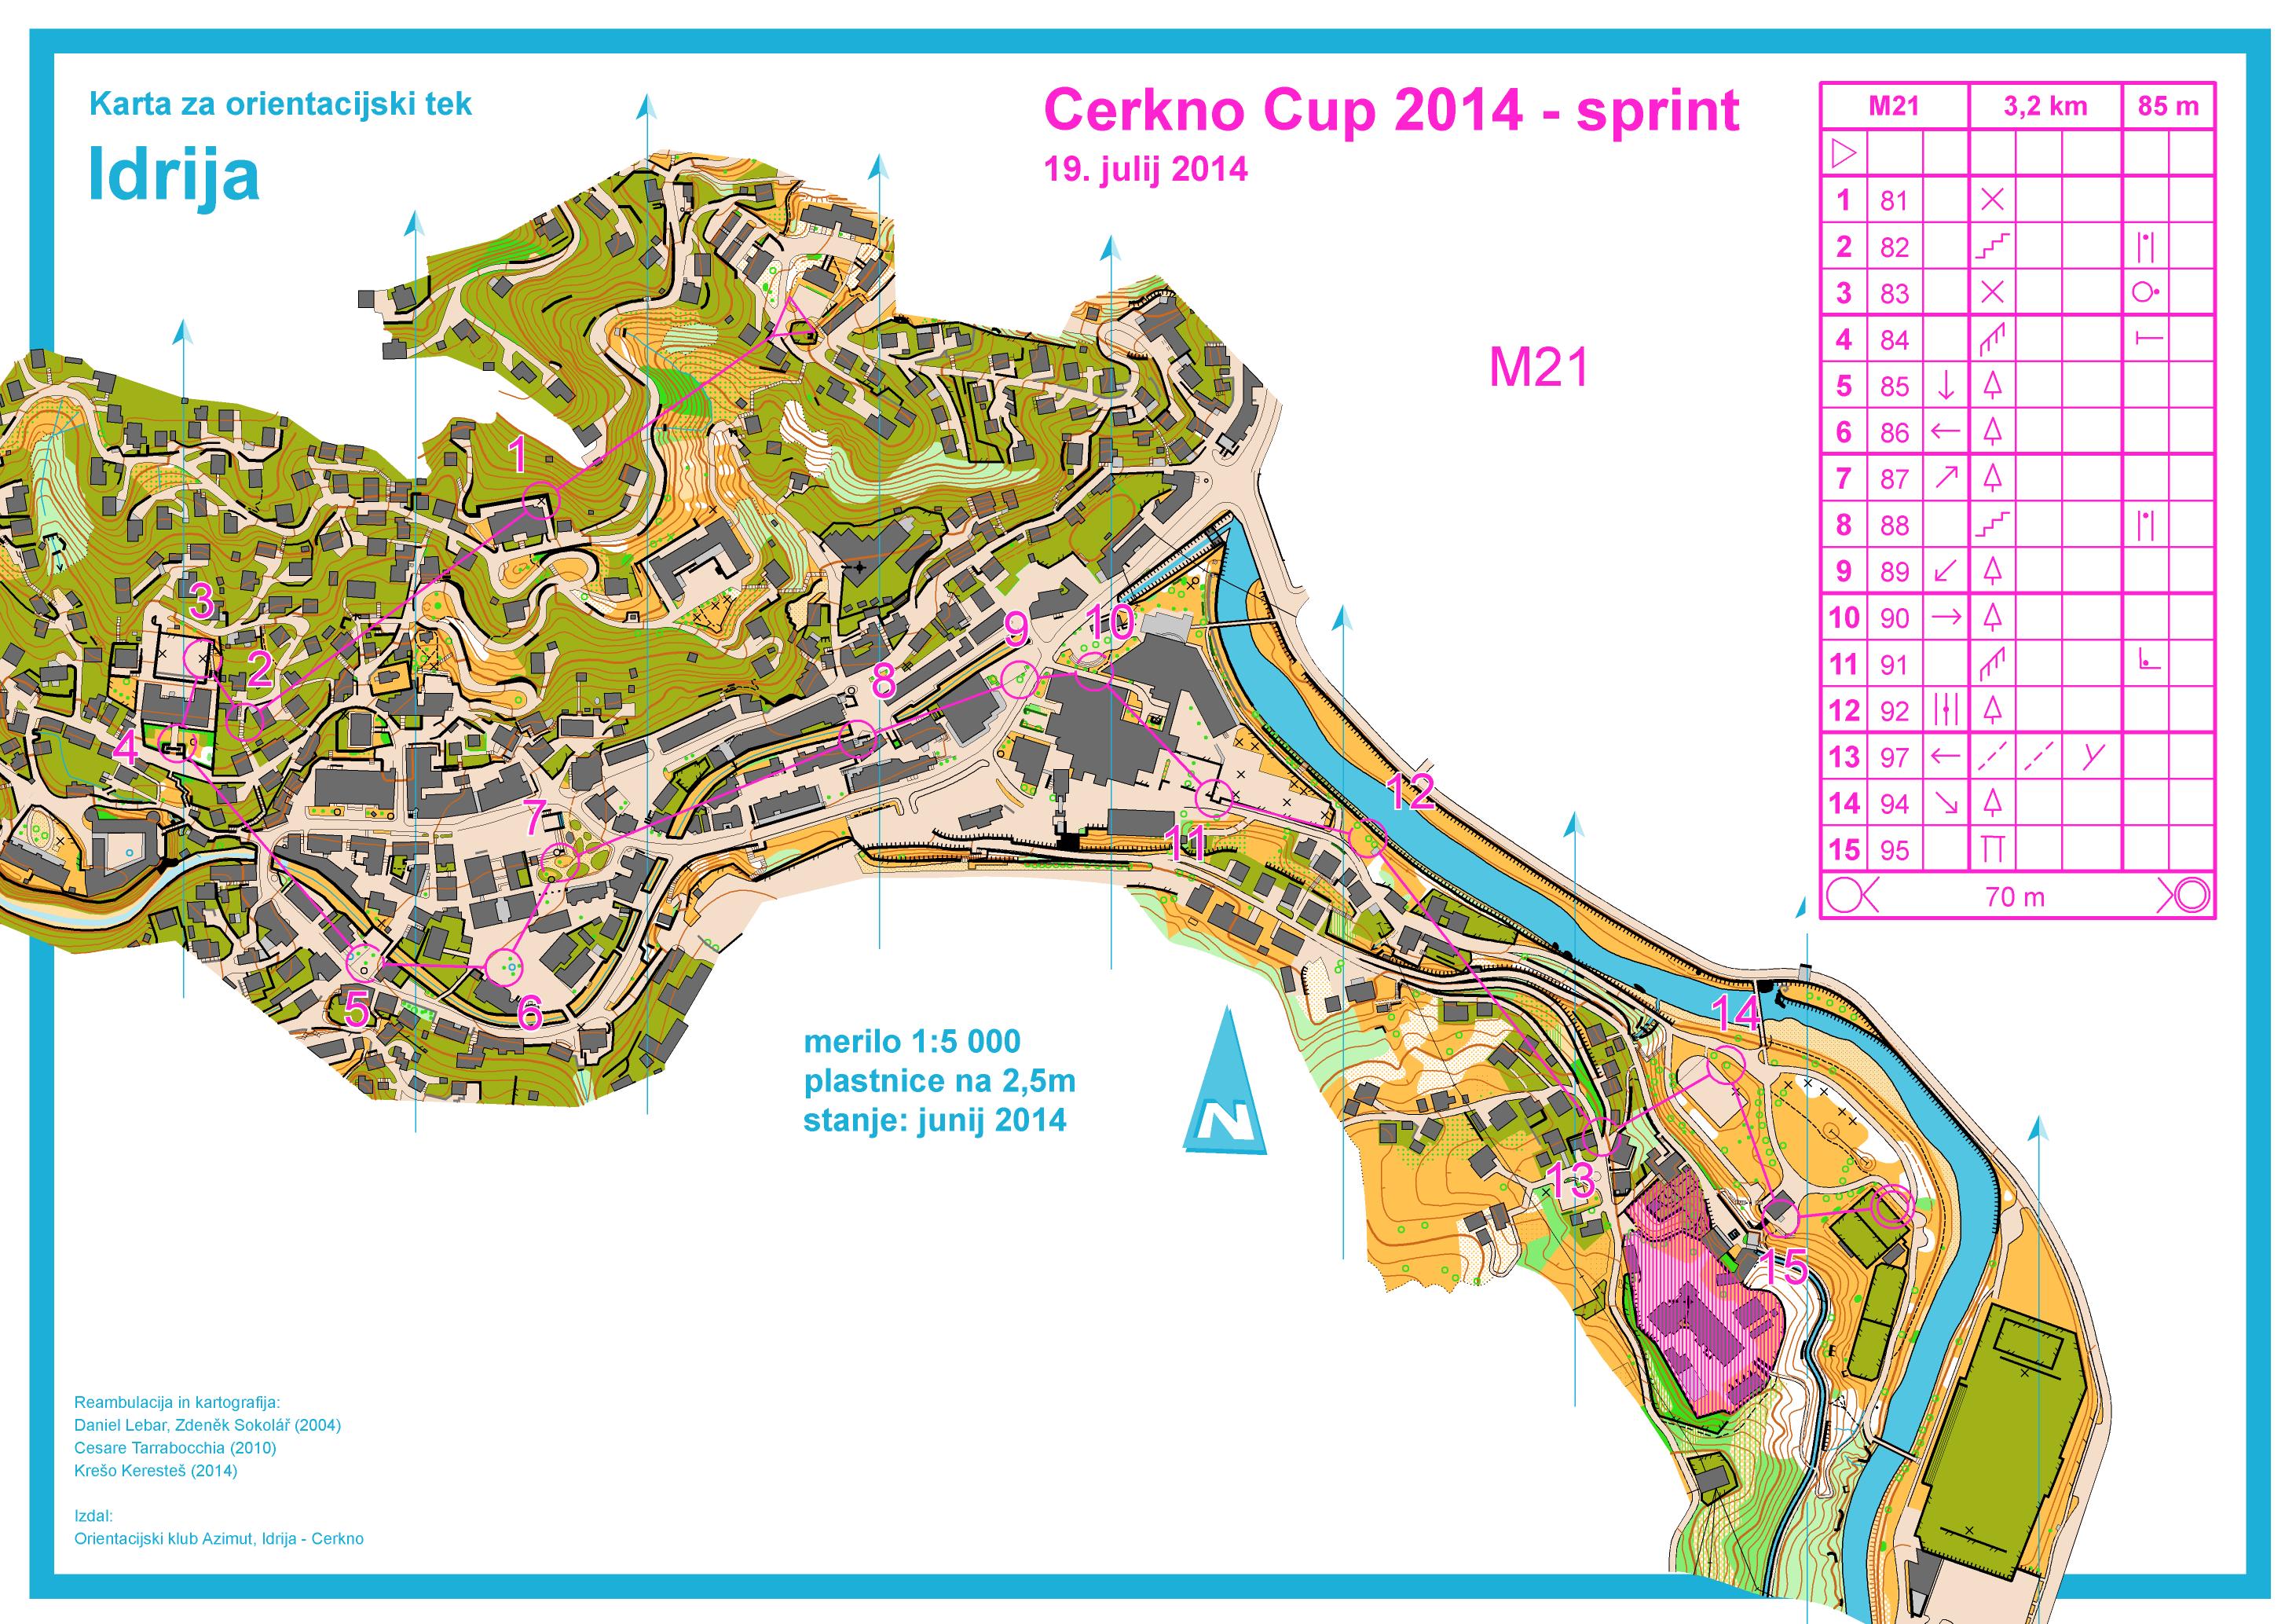 Cerkno Cup - Sprint (19.07.2014)